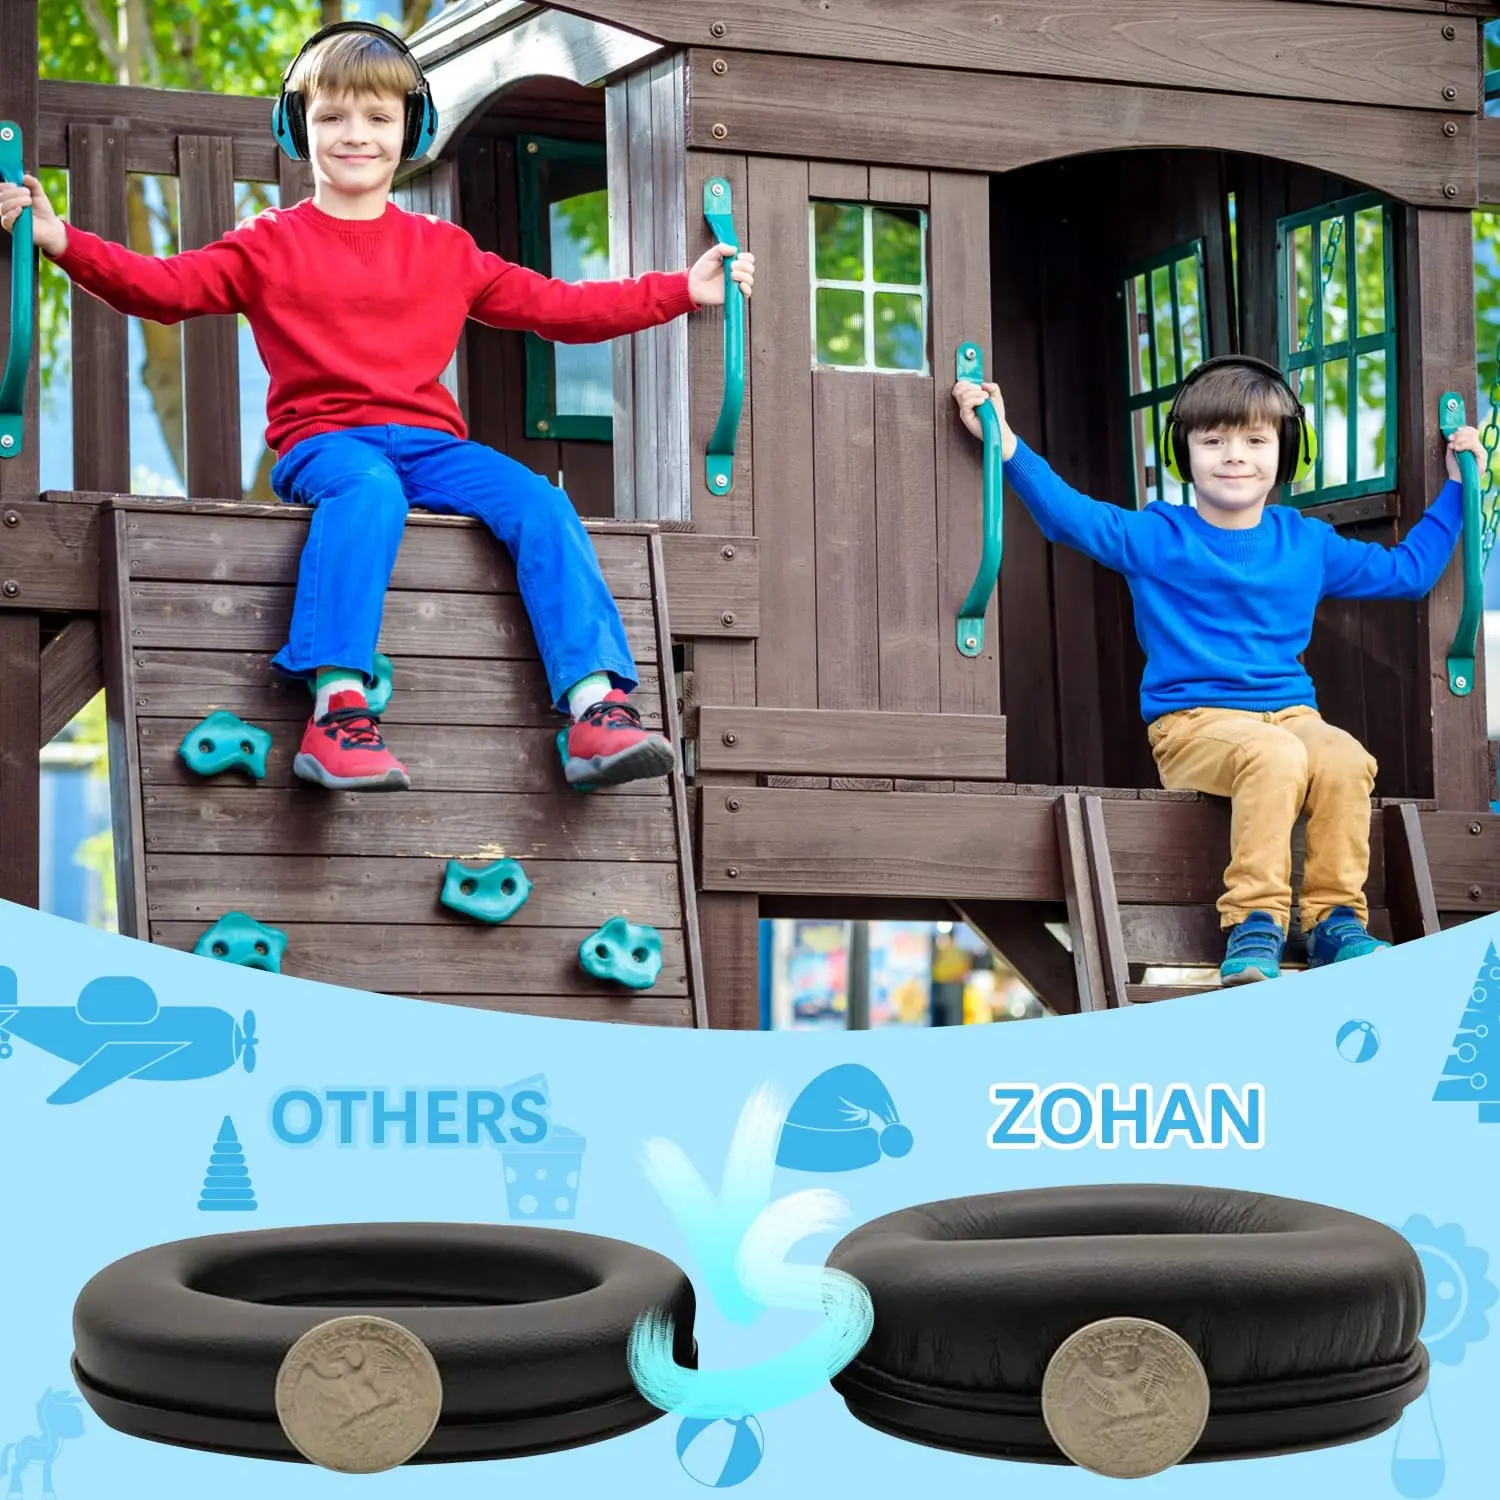 ZOHAN Kids 청력 보호 수동 귀마개 안전 Earnmuff 헤드셋 소음 감소 자폐증 어린이를위한 DIY 귀 수비수